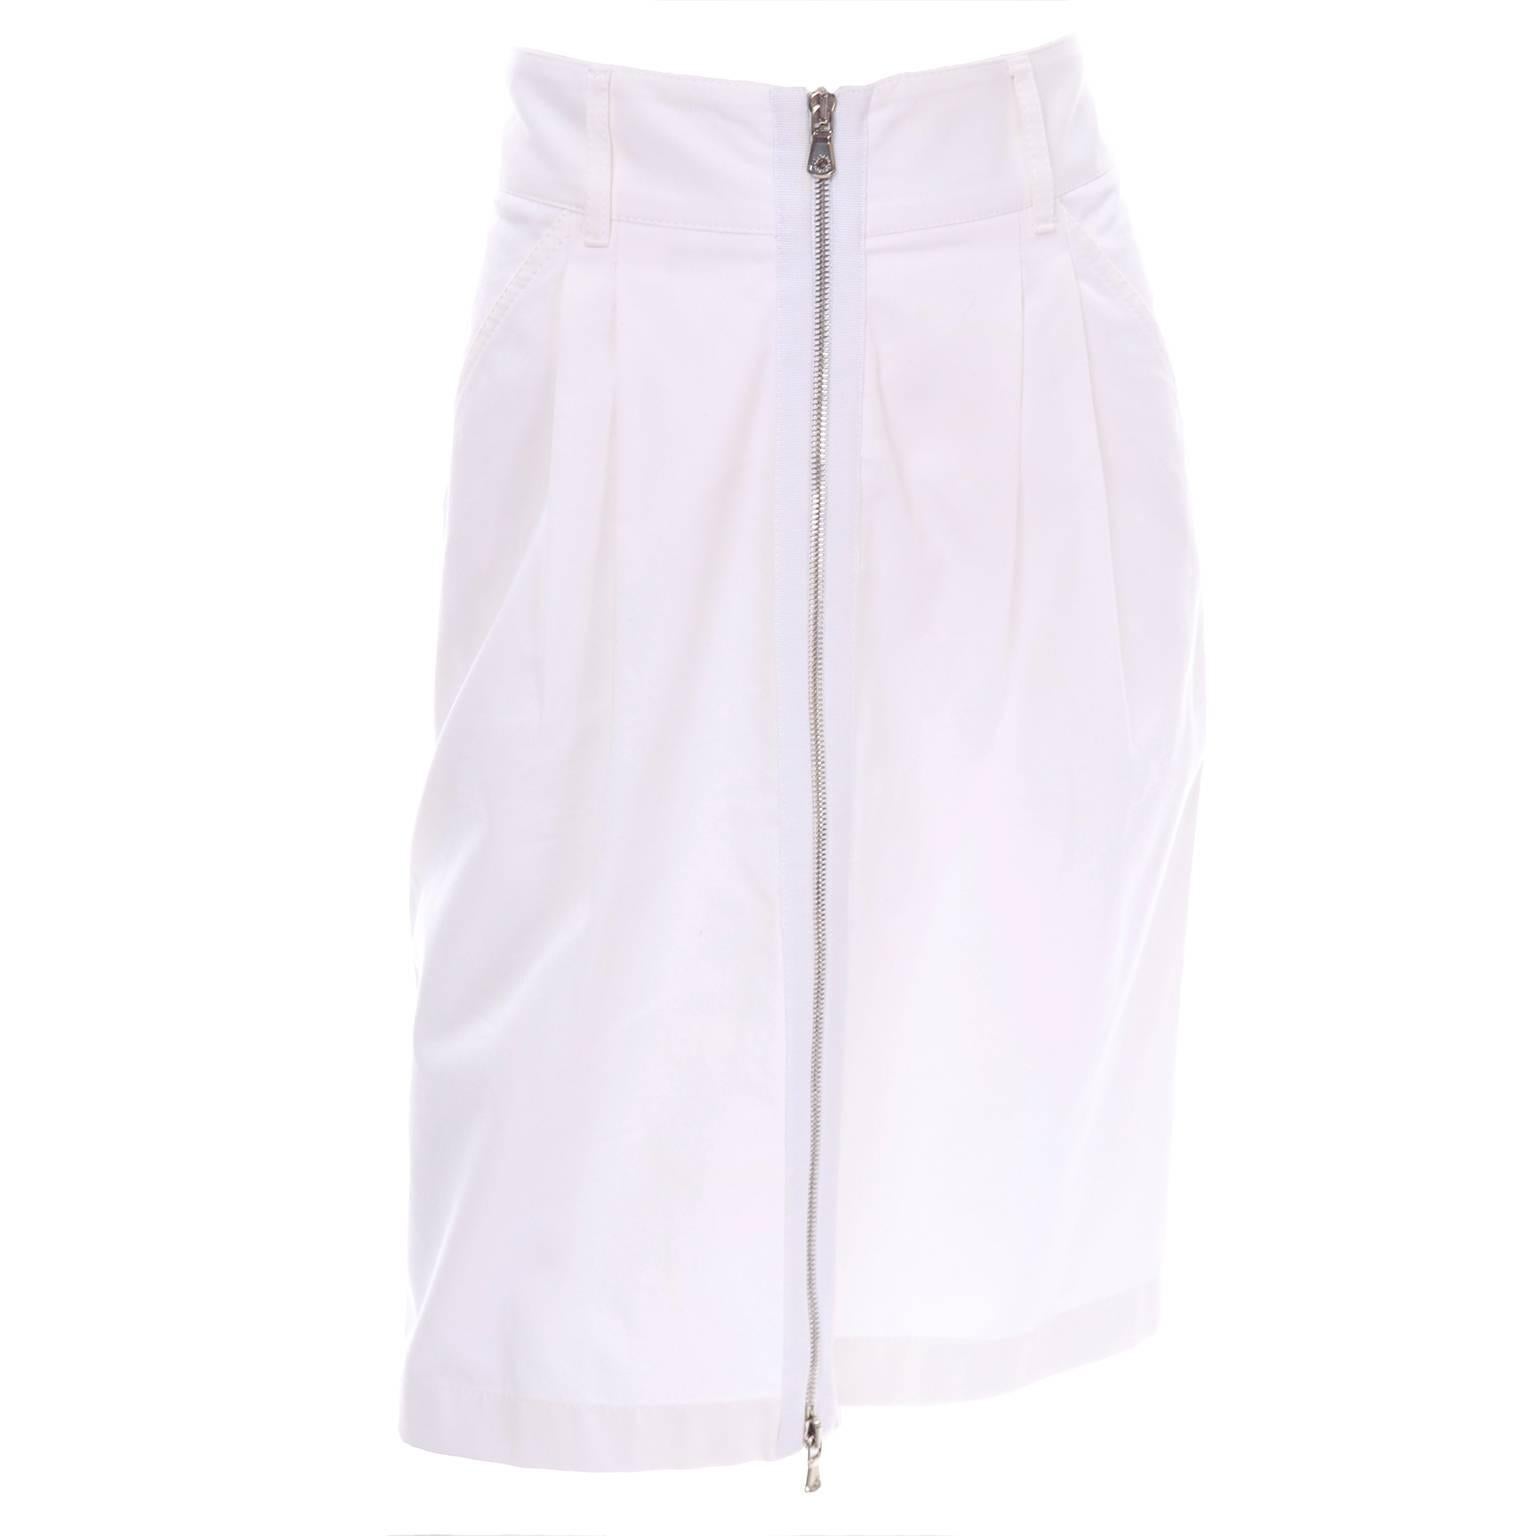 Dolce & Gabbana White Cotton Denim Pencil Skirt W/ Exposed Zipper Size 6